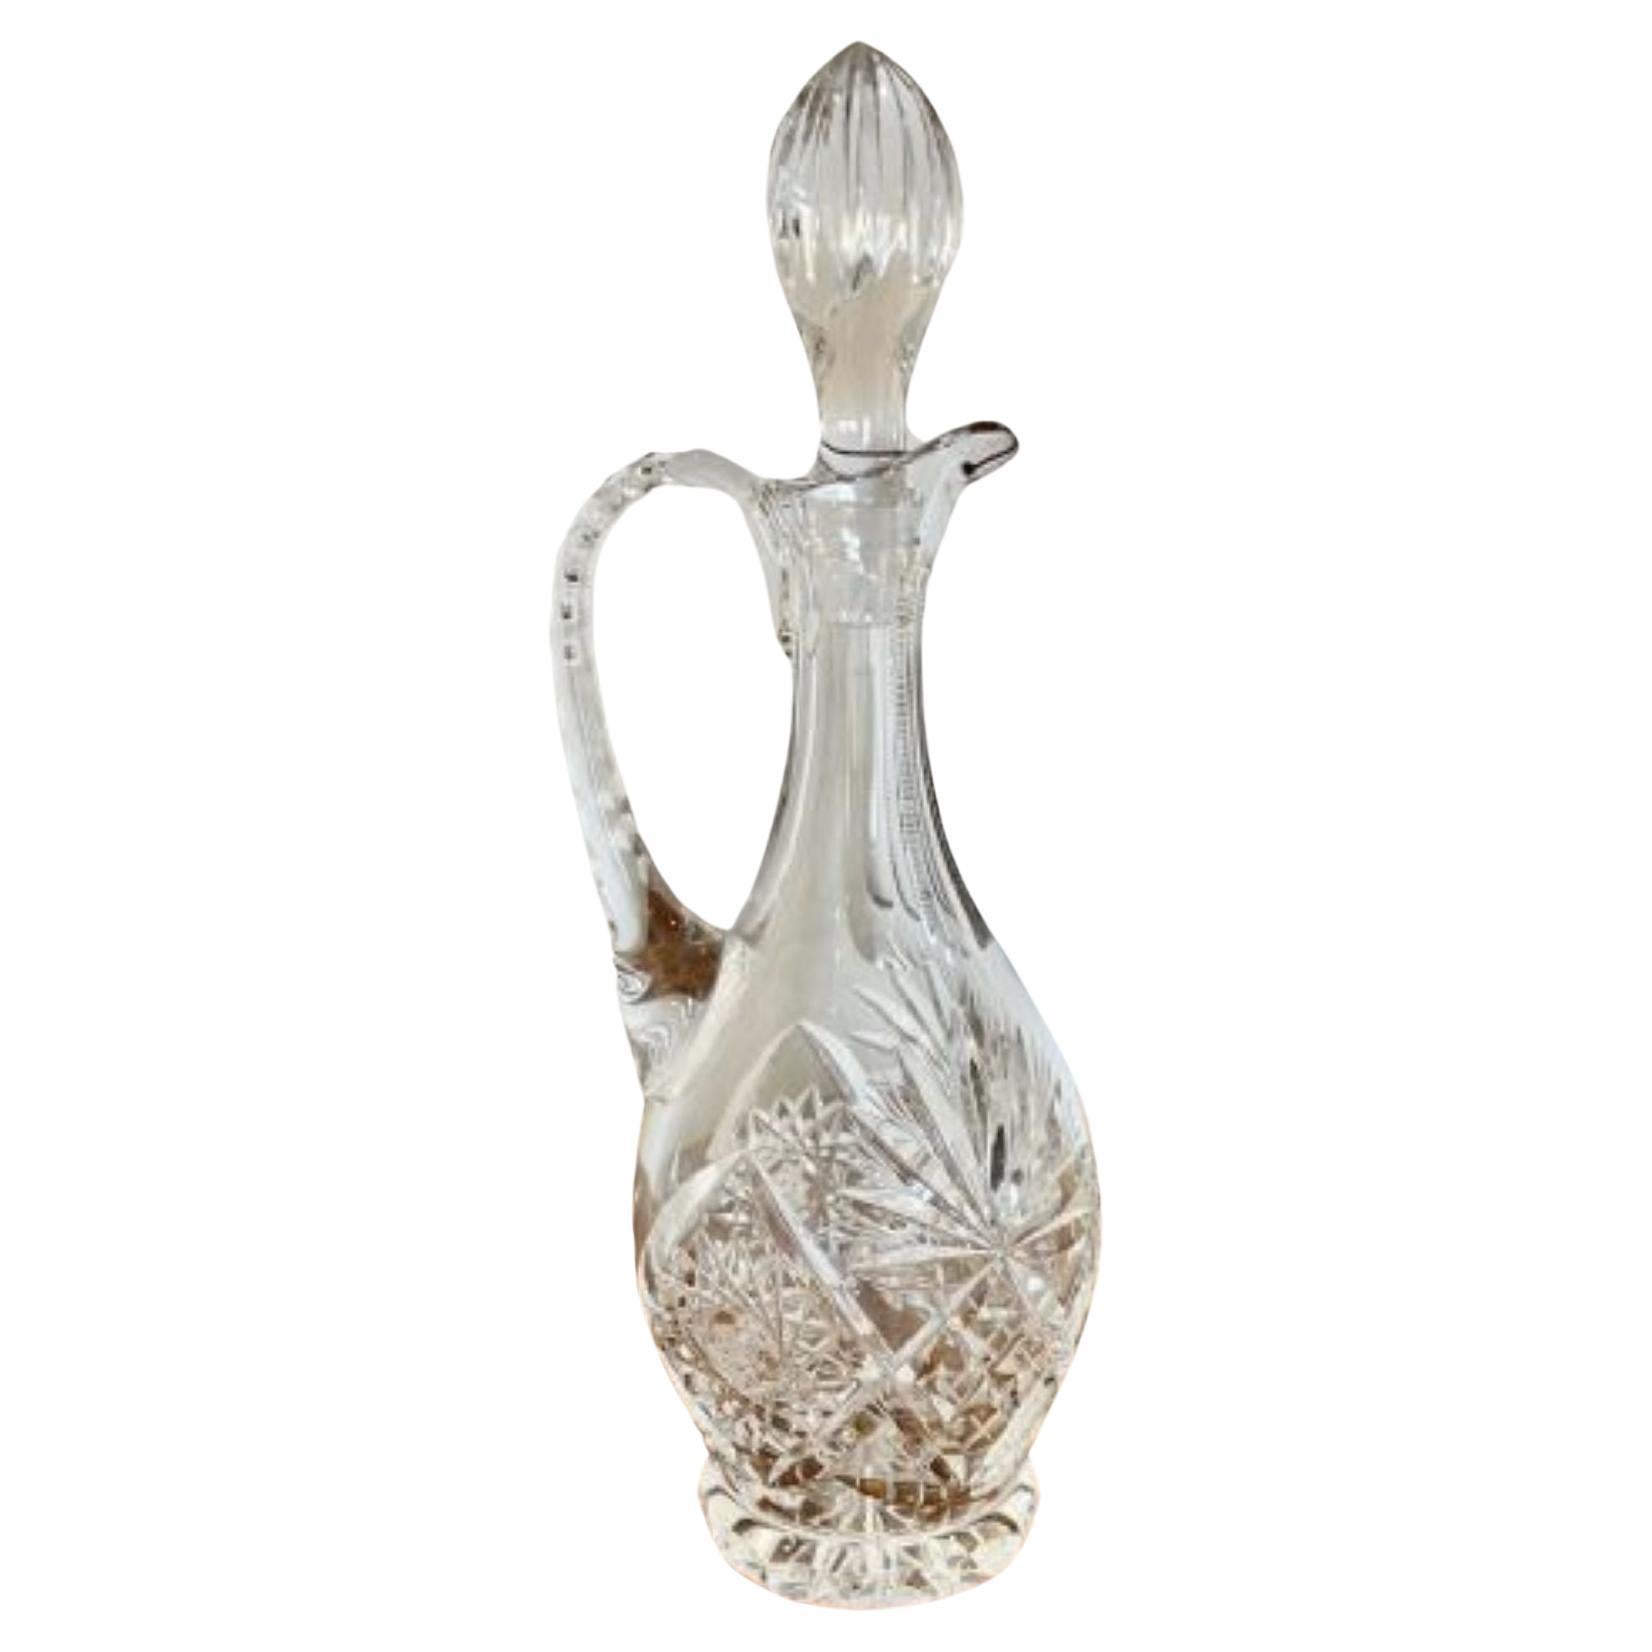 Wonderful quality antique Edwardian cut glass decanter 